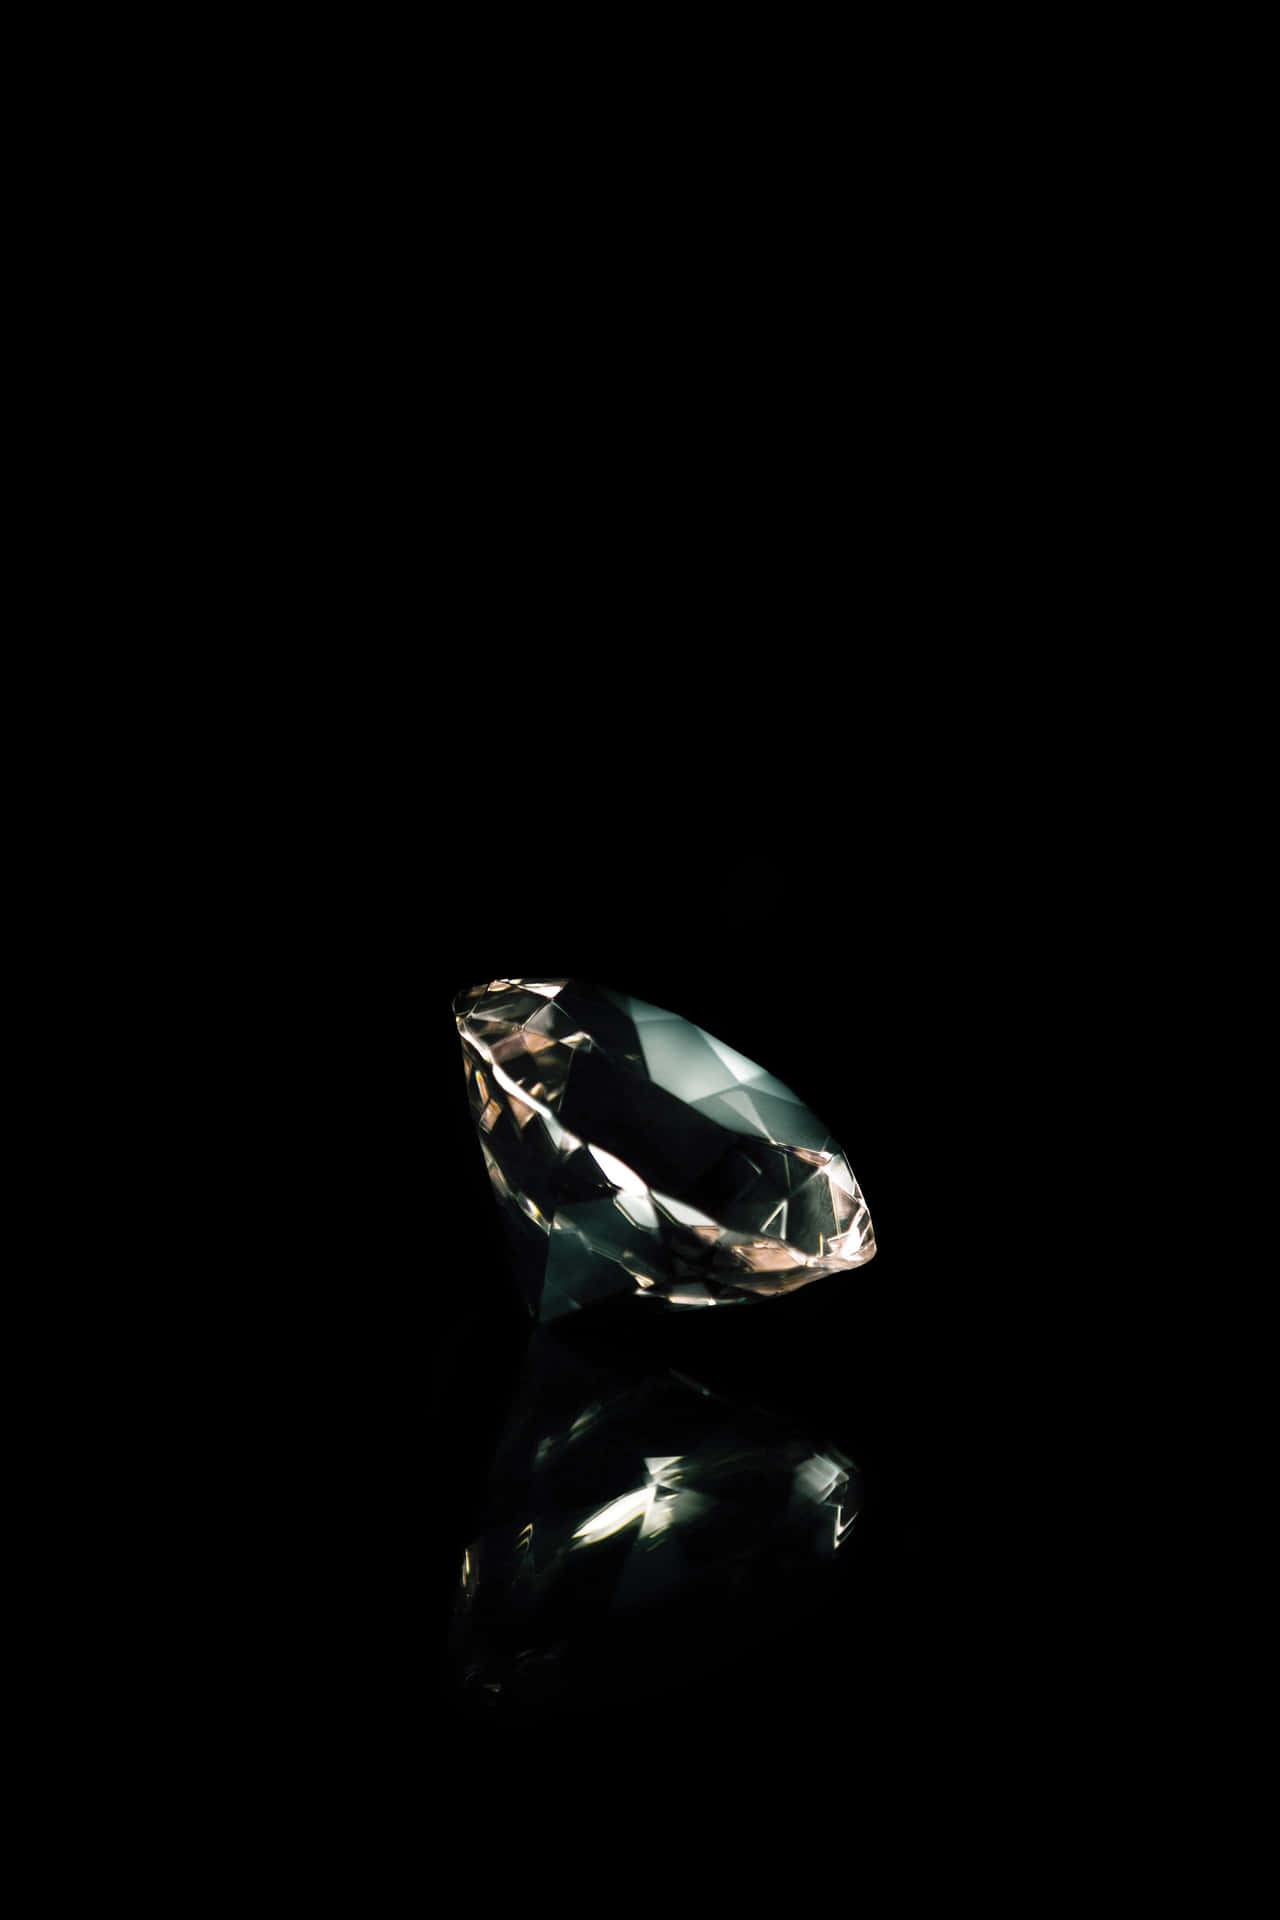 Captivating Sparkle: A Diamond's True Brilliance